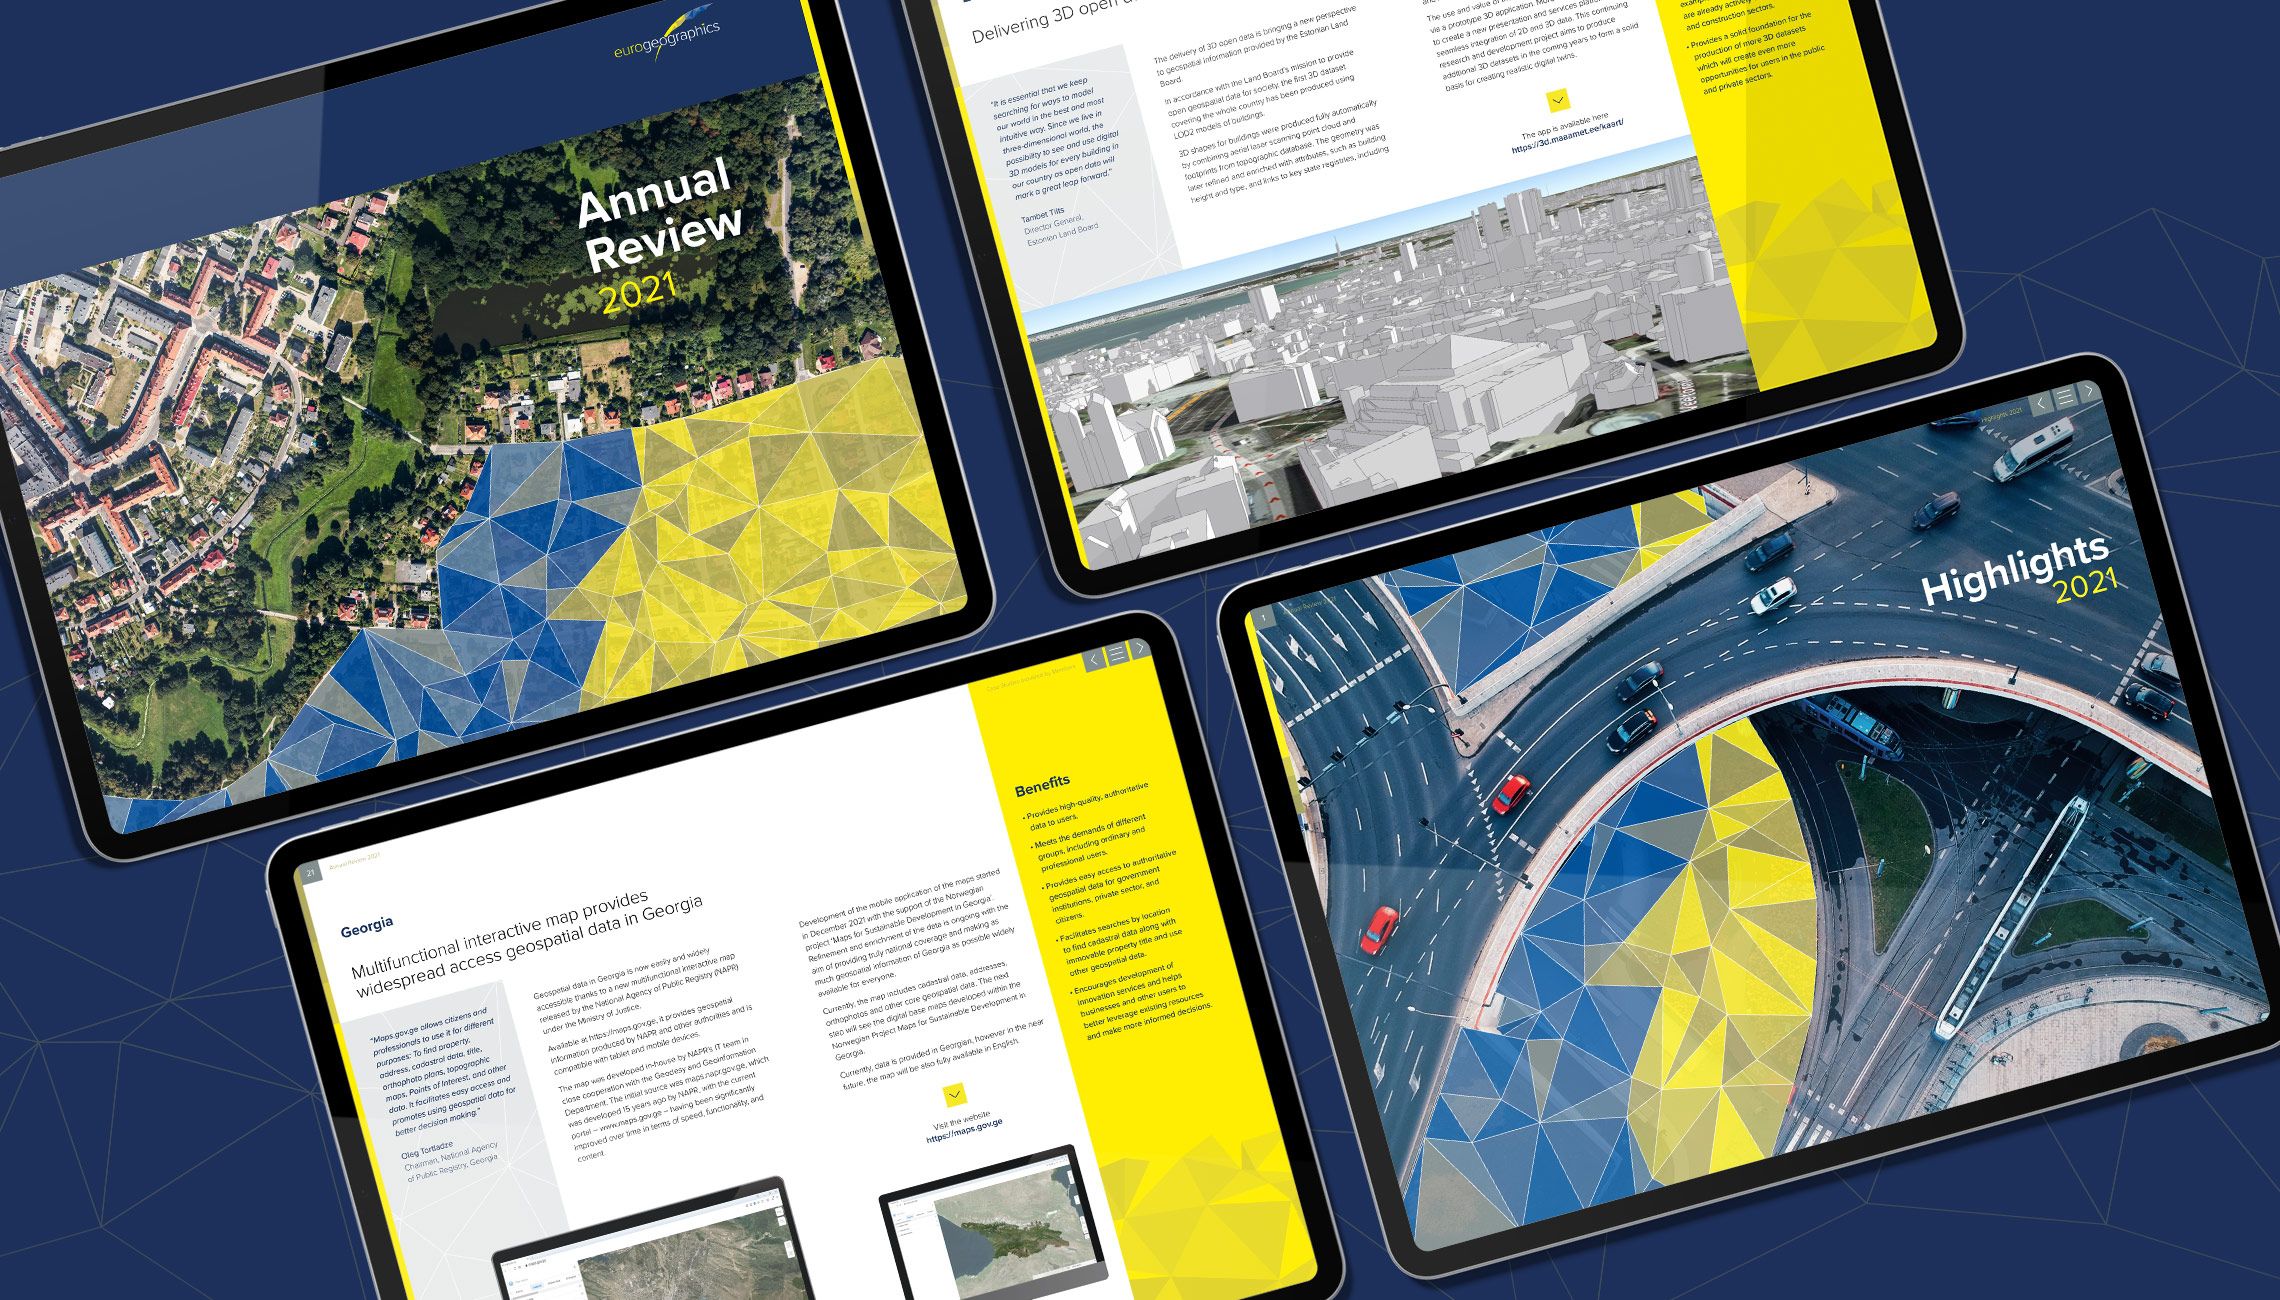 publication: Design of activity report - image 1